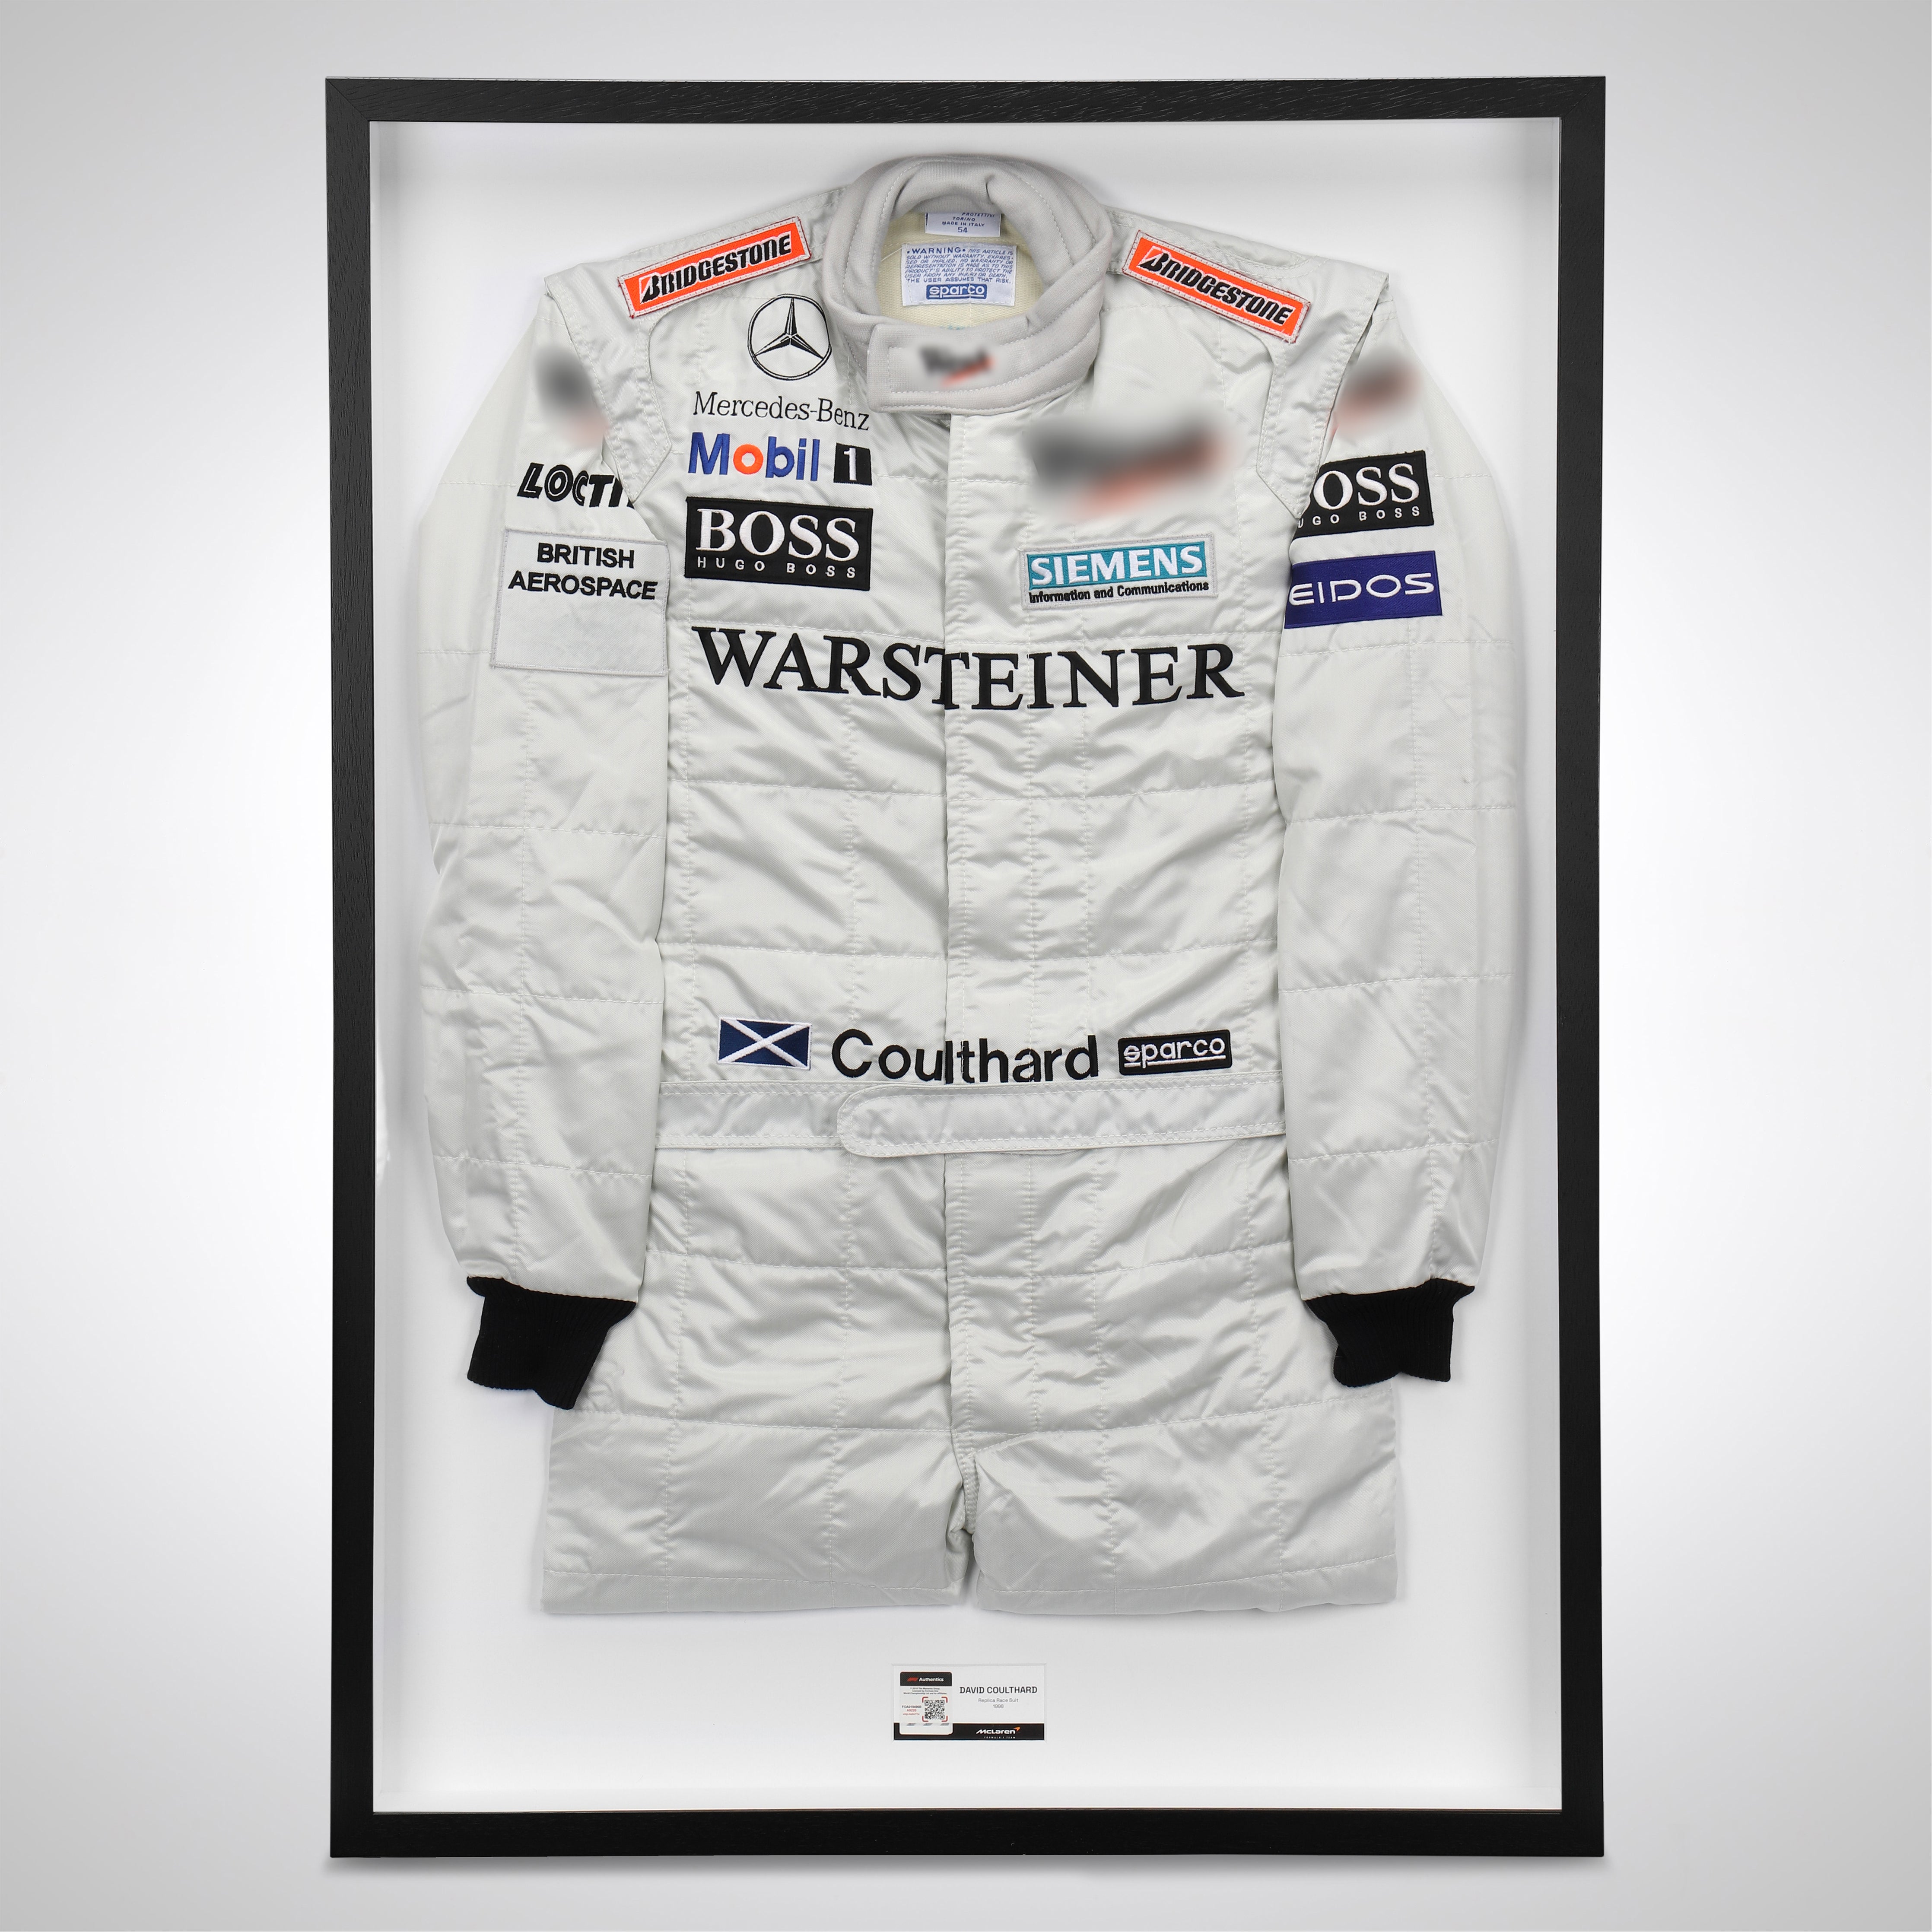 David Coulthard 1998 Replica McLaren F1 Team Race Suit with Warsteiner and Siemens Branding